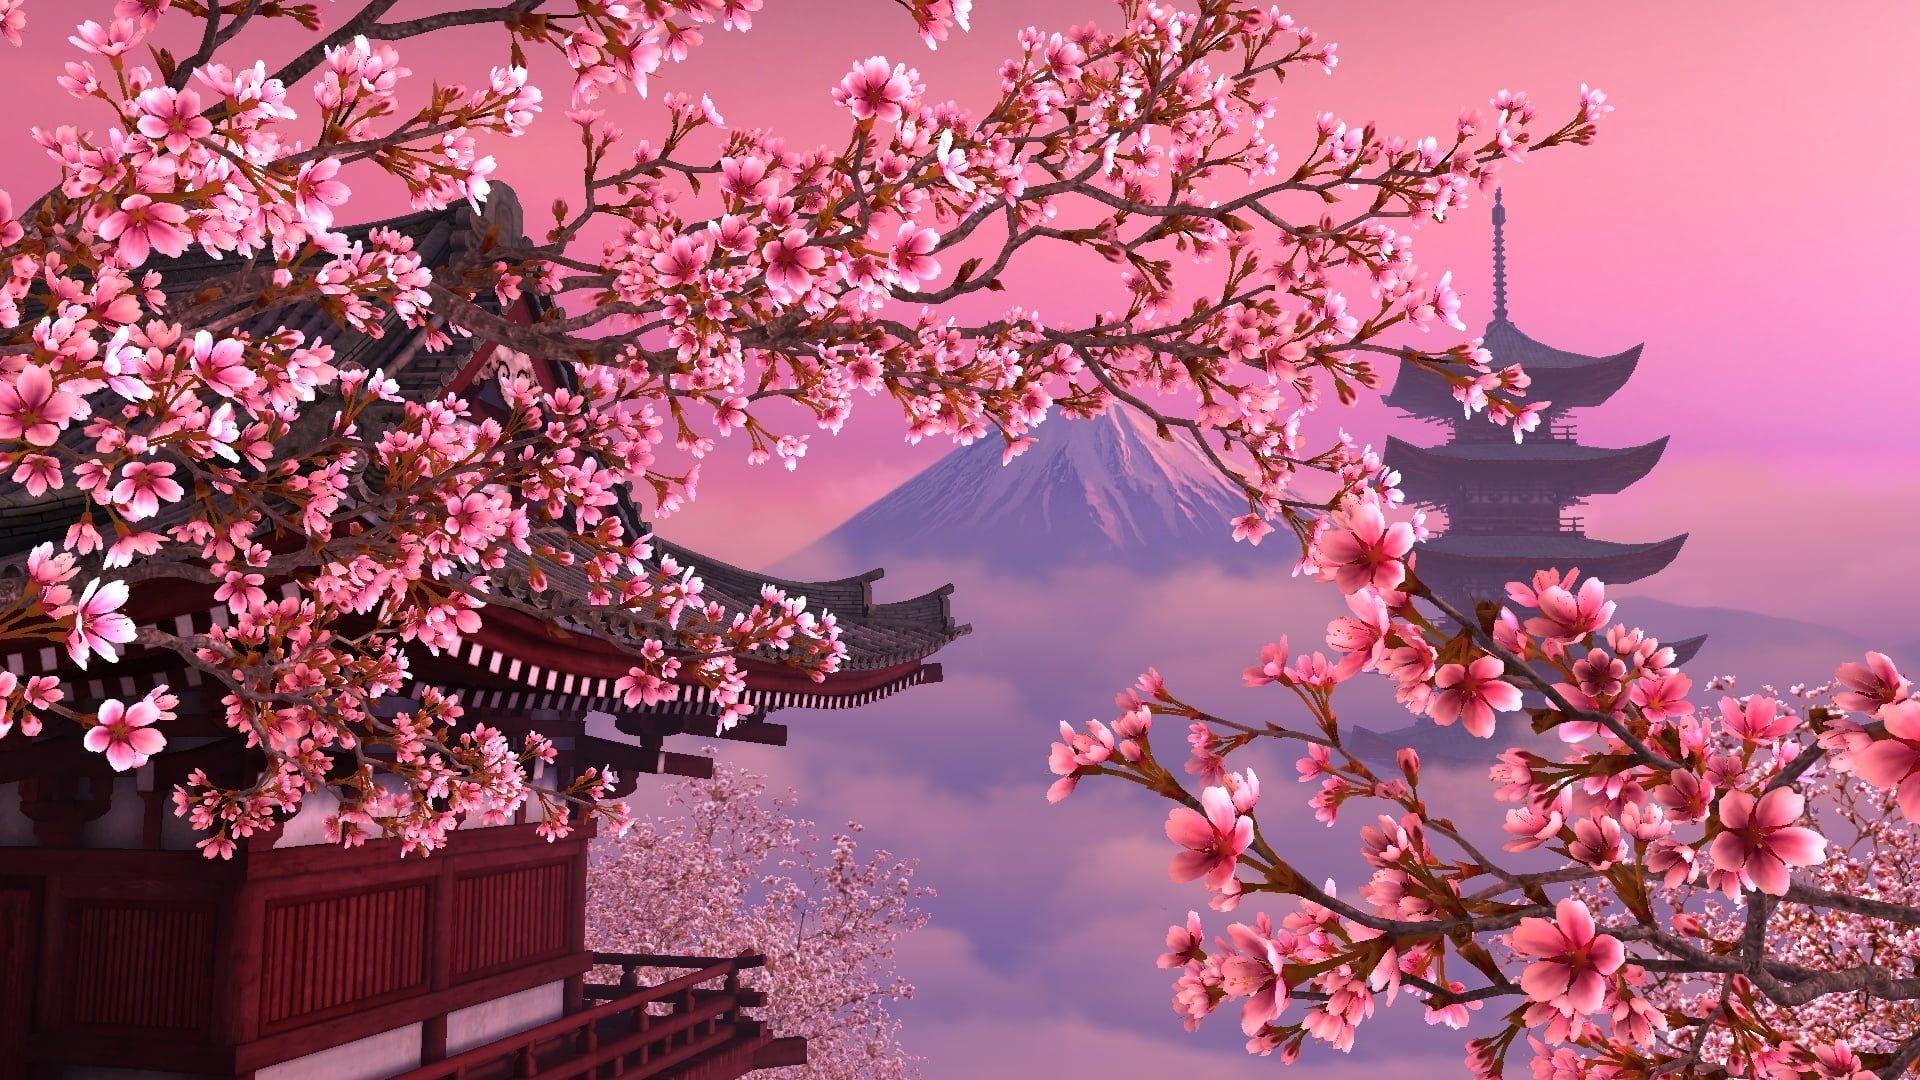 x 1080) Cherry blossom on Mount Fiji animated wallpaper